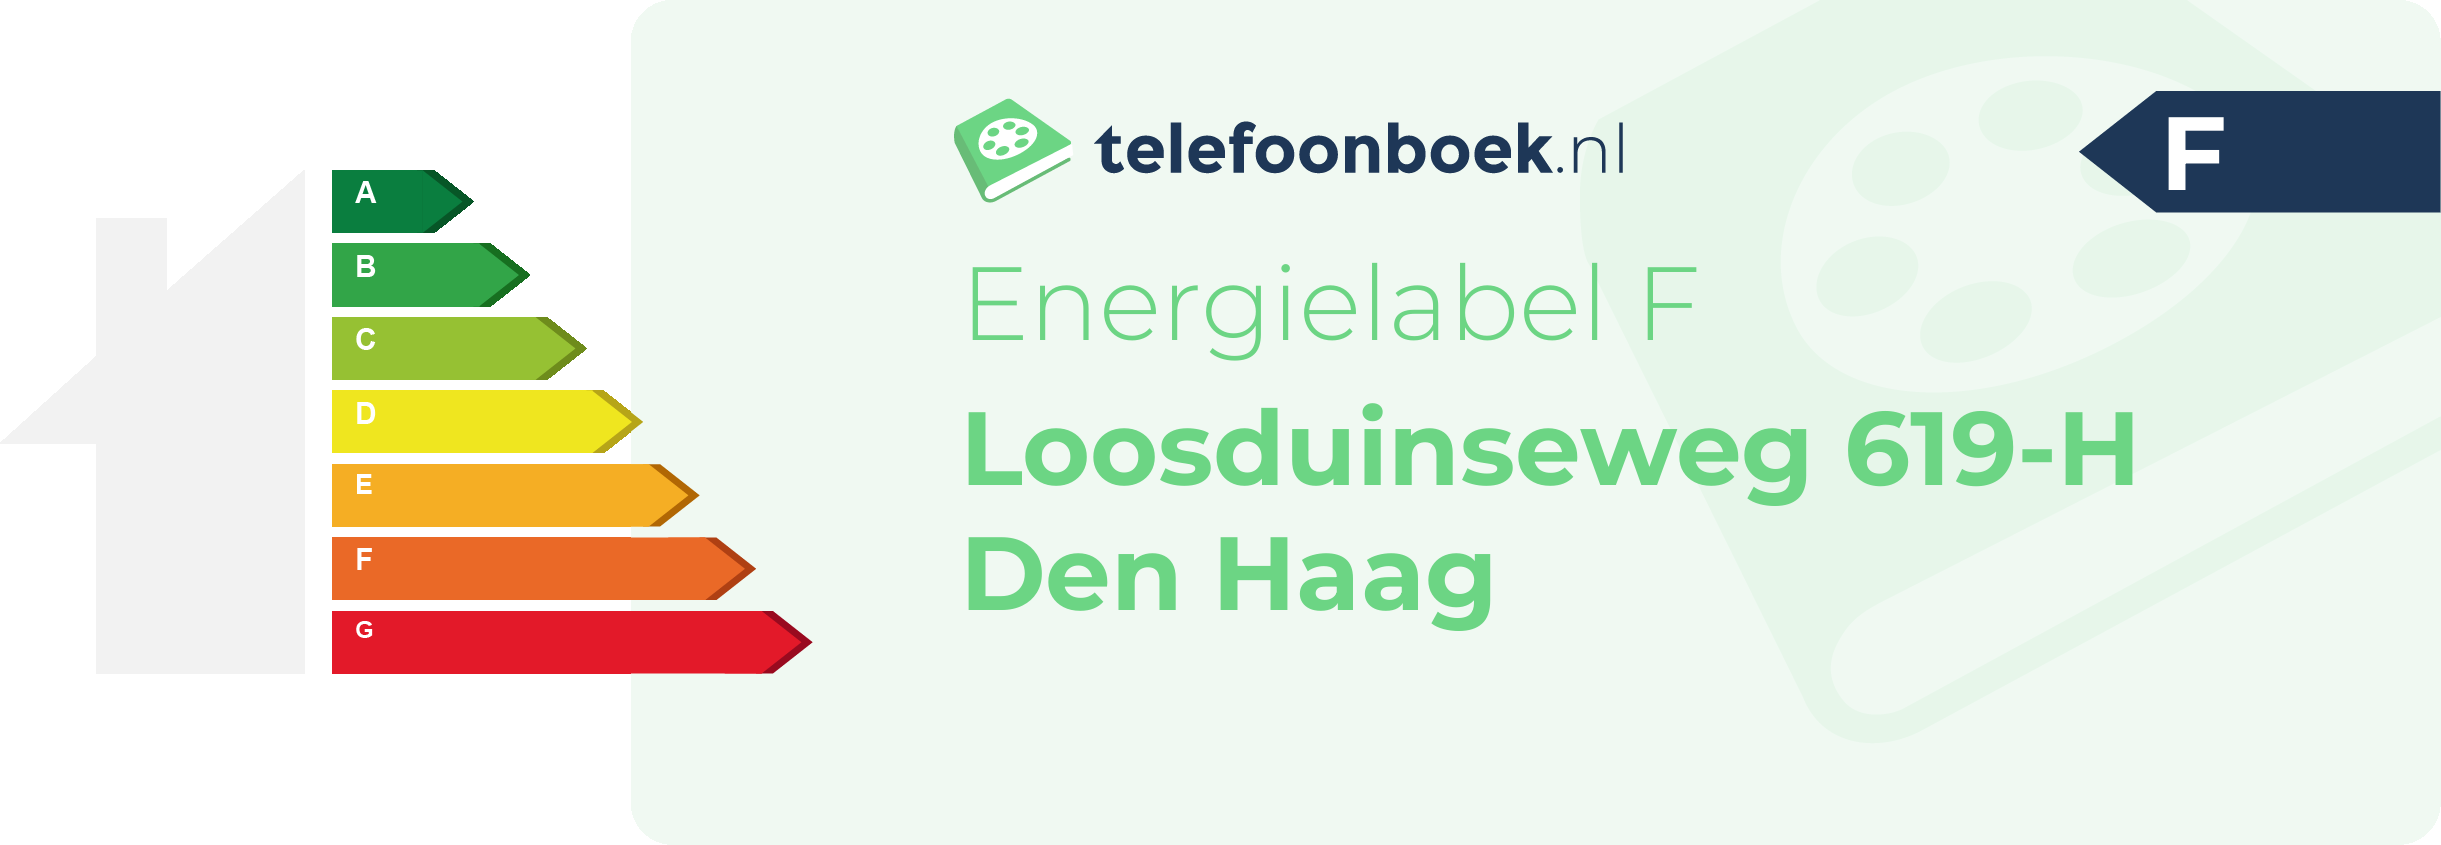 Energielabel Loosduinseweg 619-H Den Haag